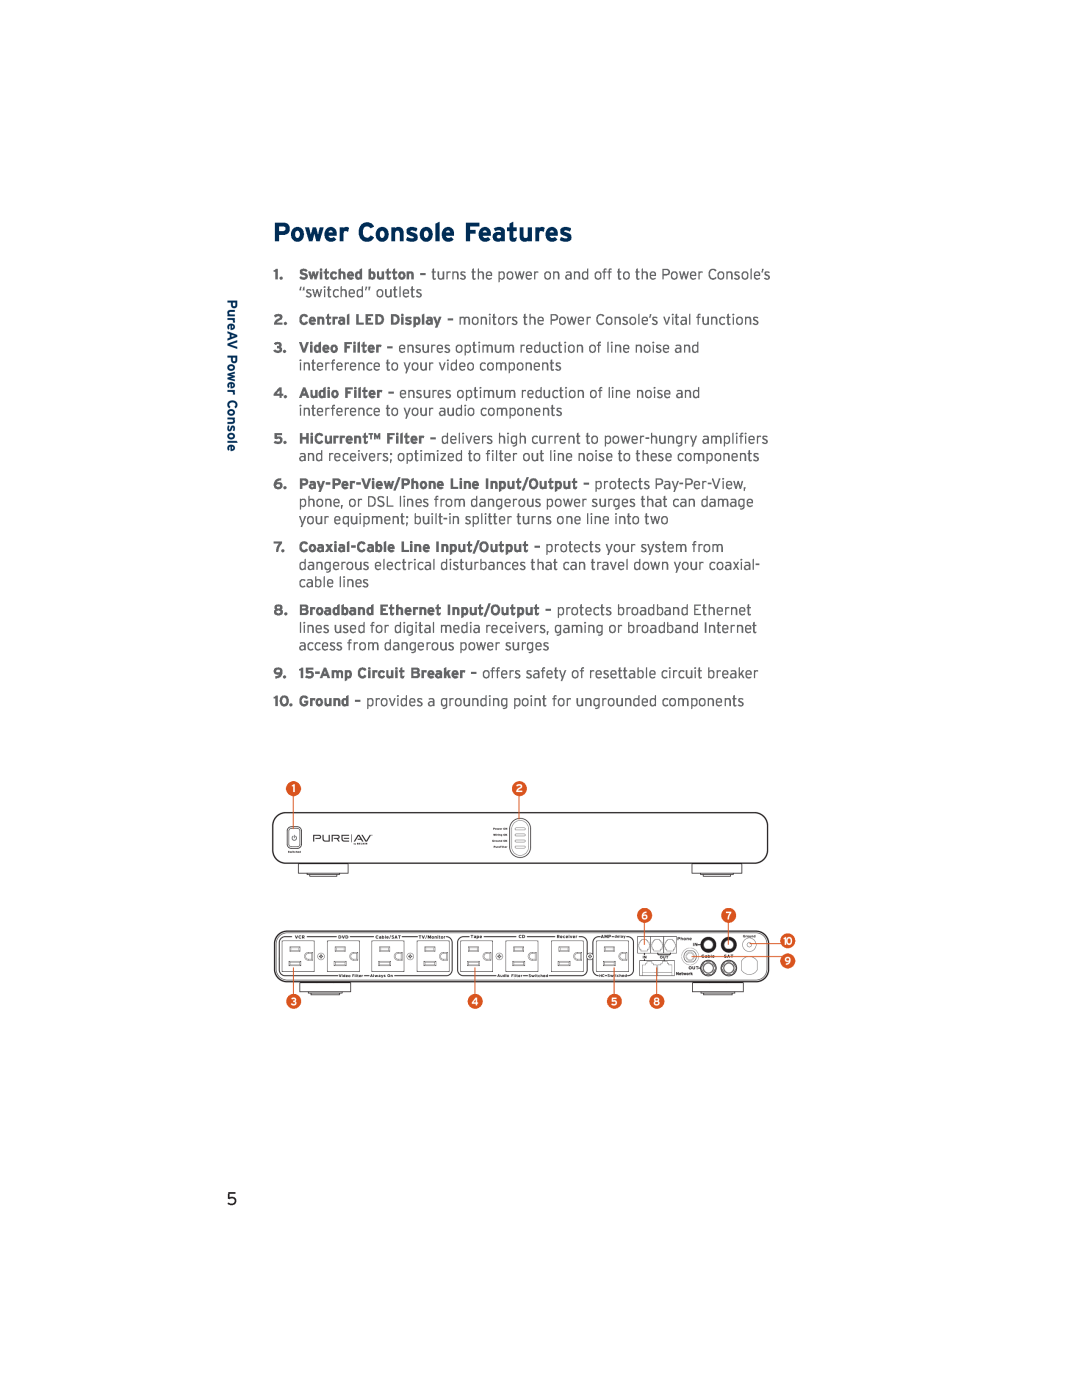 Belkin PF30 user manual Power Console Features, PureAV Power Console 